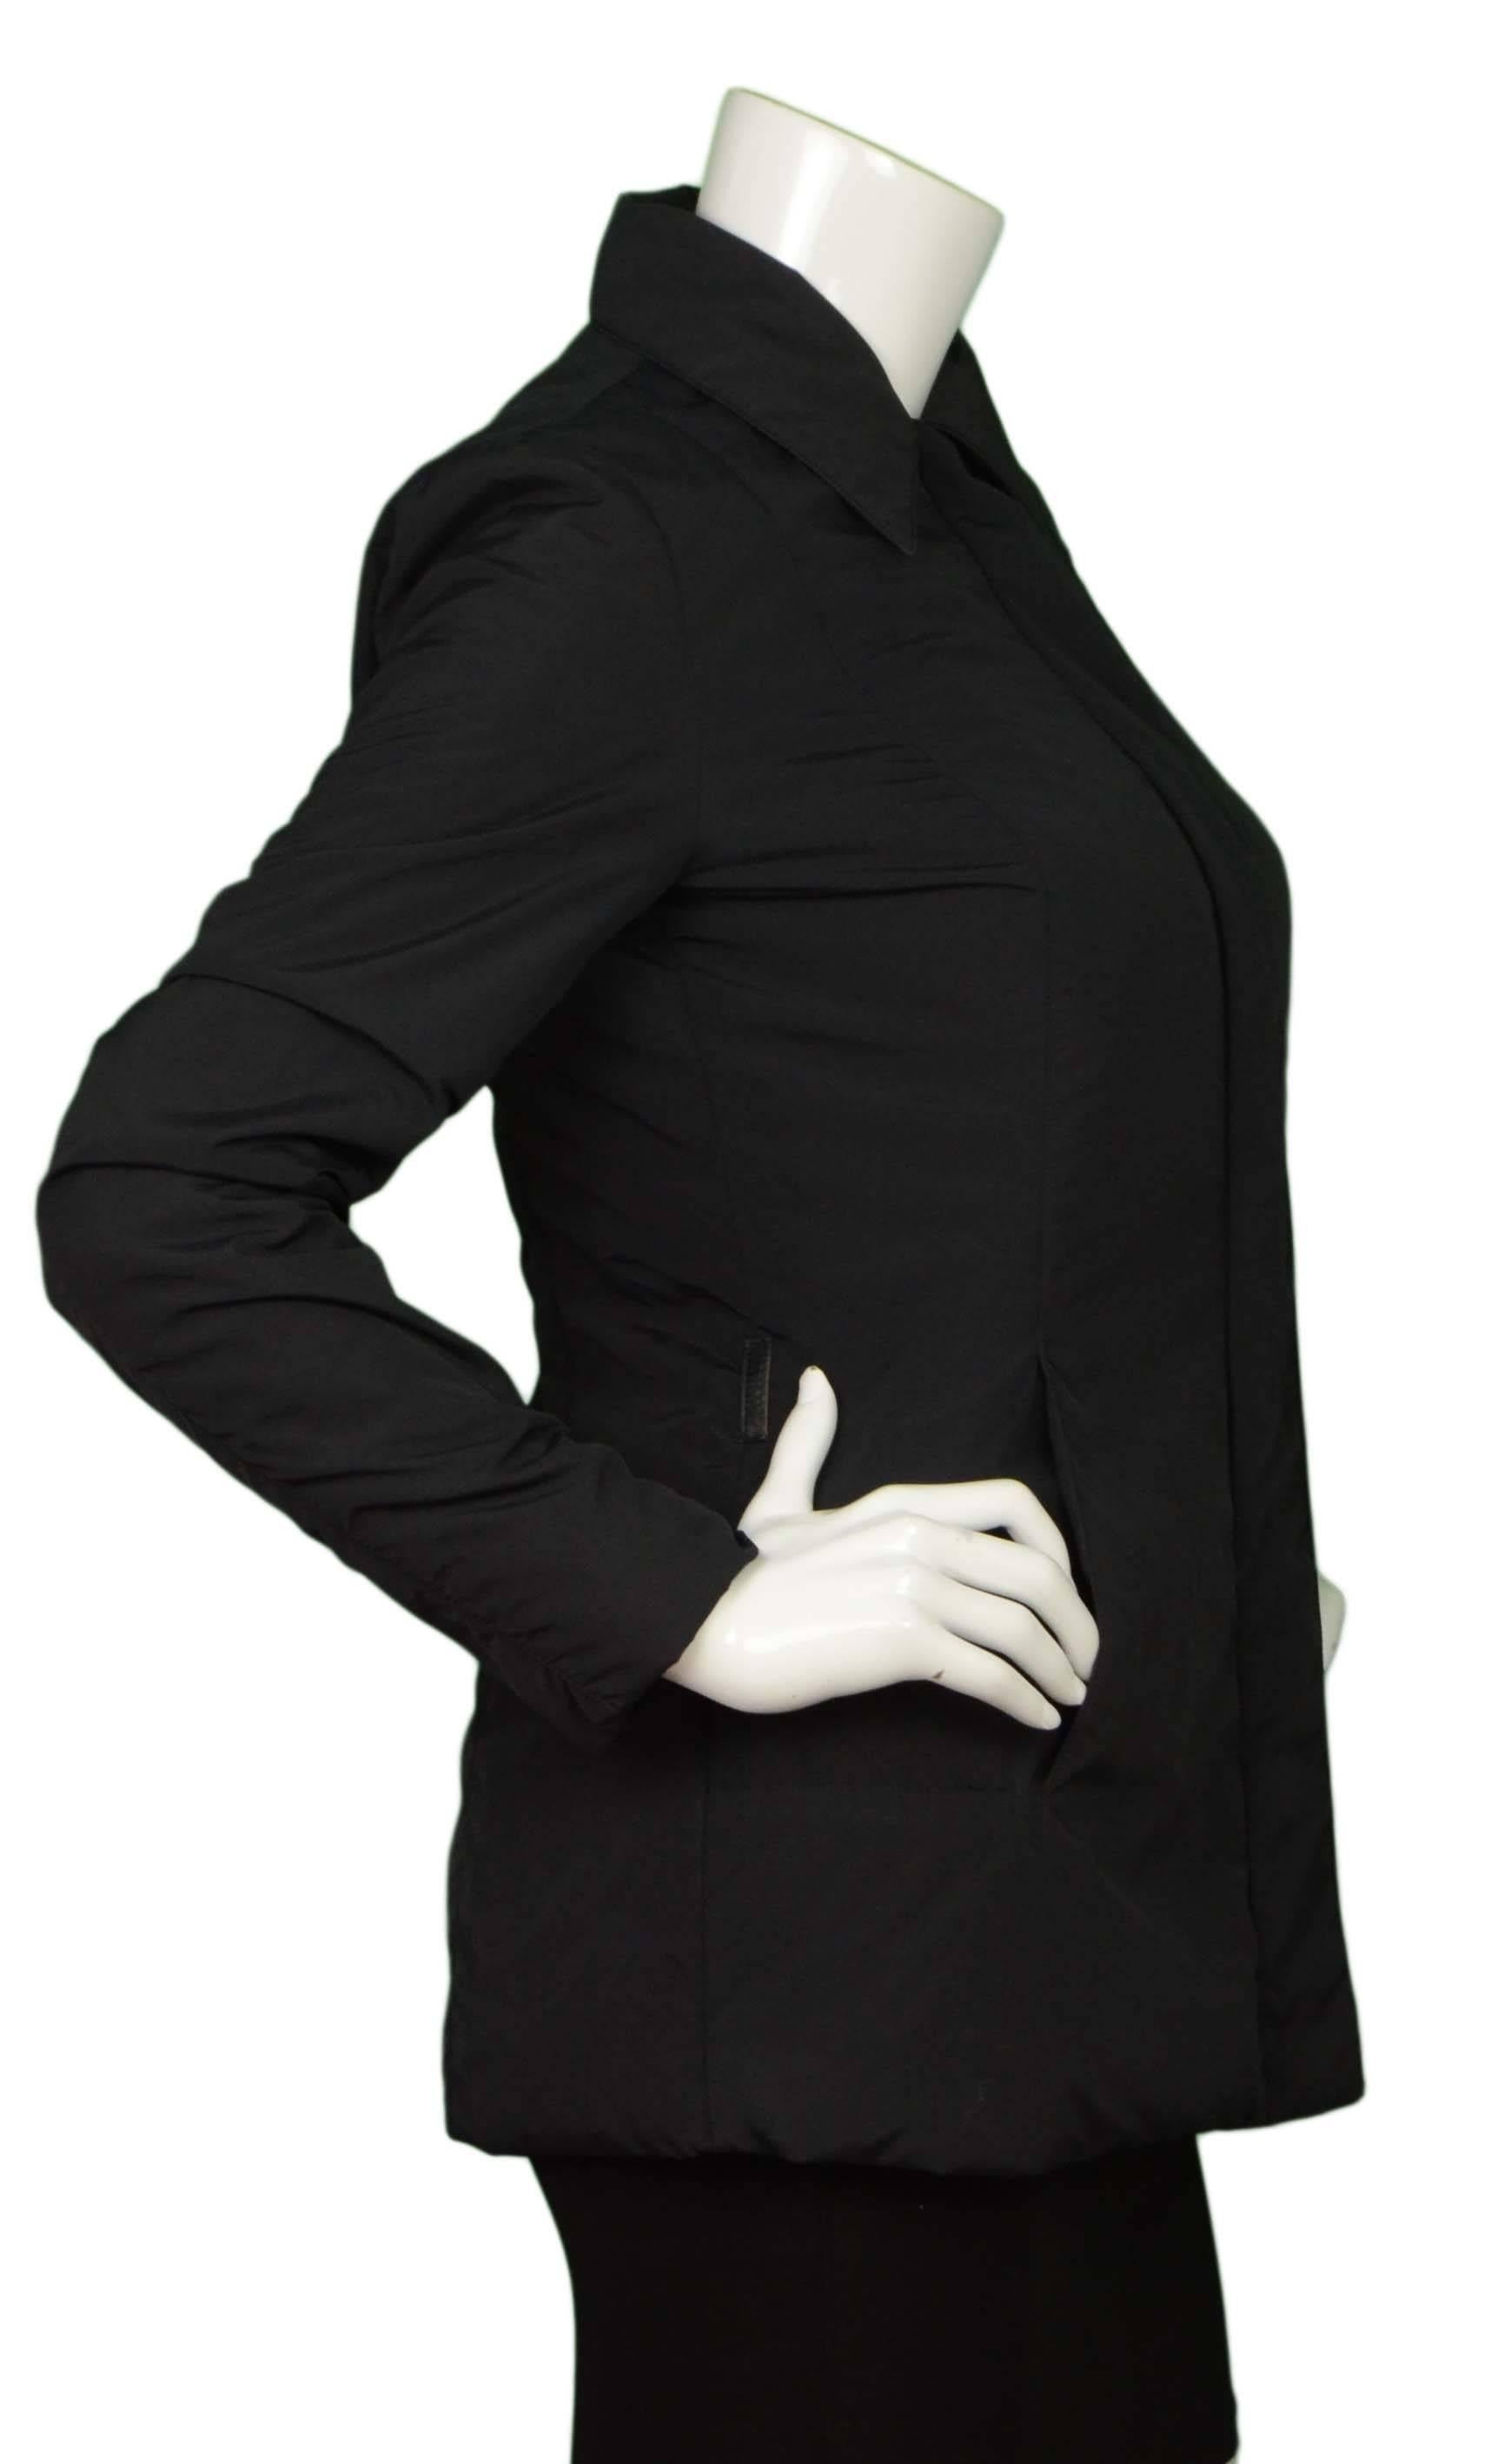 Gucci Black Rain Jacket & Removable Fur Vest 
Fur vest snaps into lining of jacket

Made In: Italy
Color: Black
Composition: Jacket- 53% nylon, 42% polyester, 5% polyurethane, Vest- 100% fur
Lining: Black, 53% nylon, 42% polyester, 5%